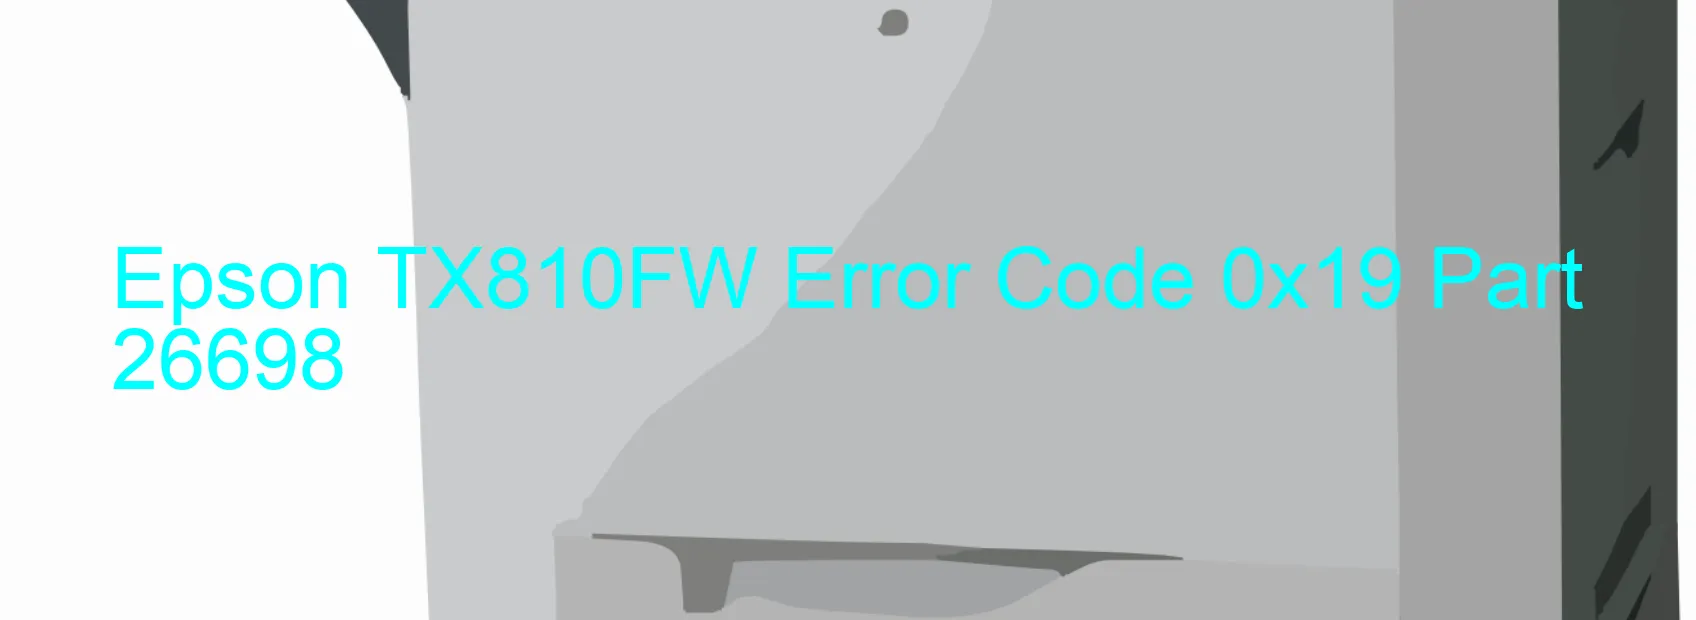 Epson TX810FW Error 0x19